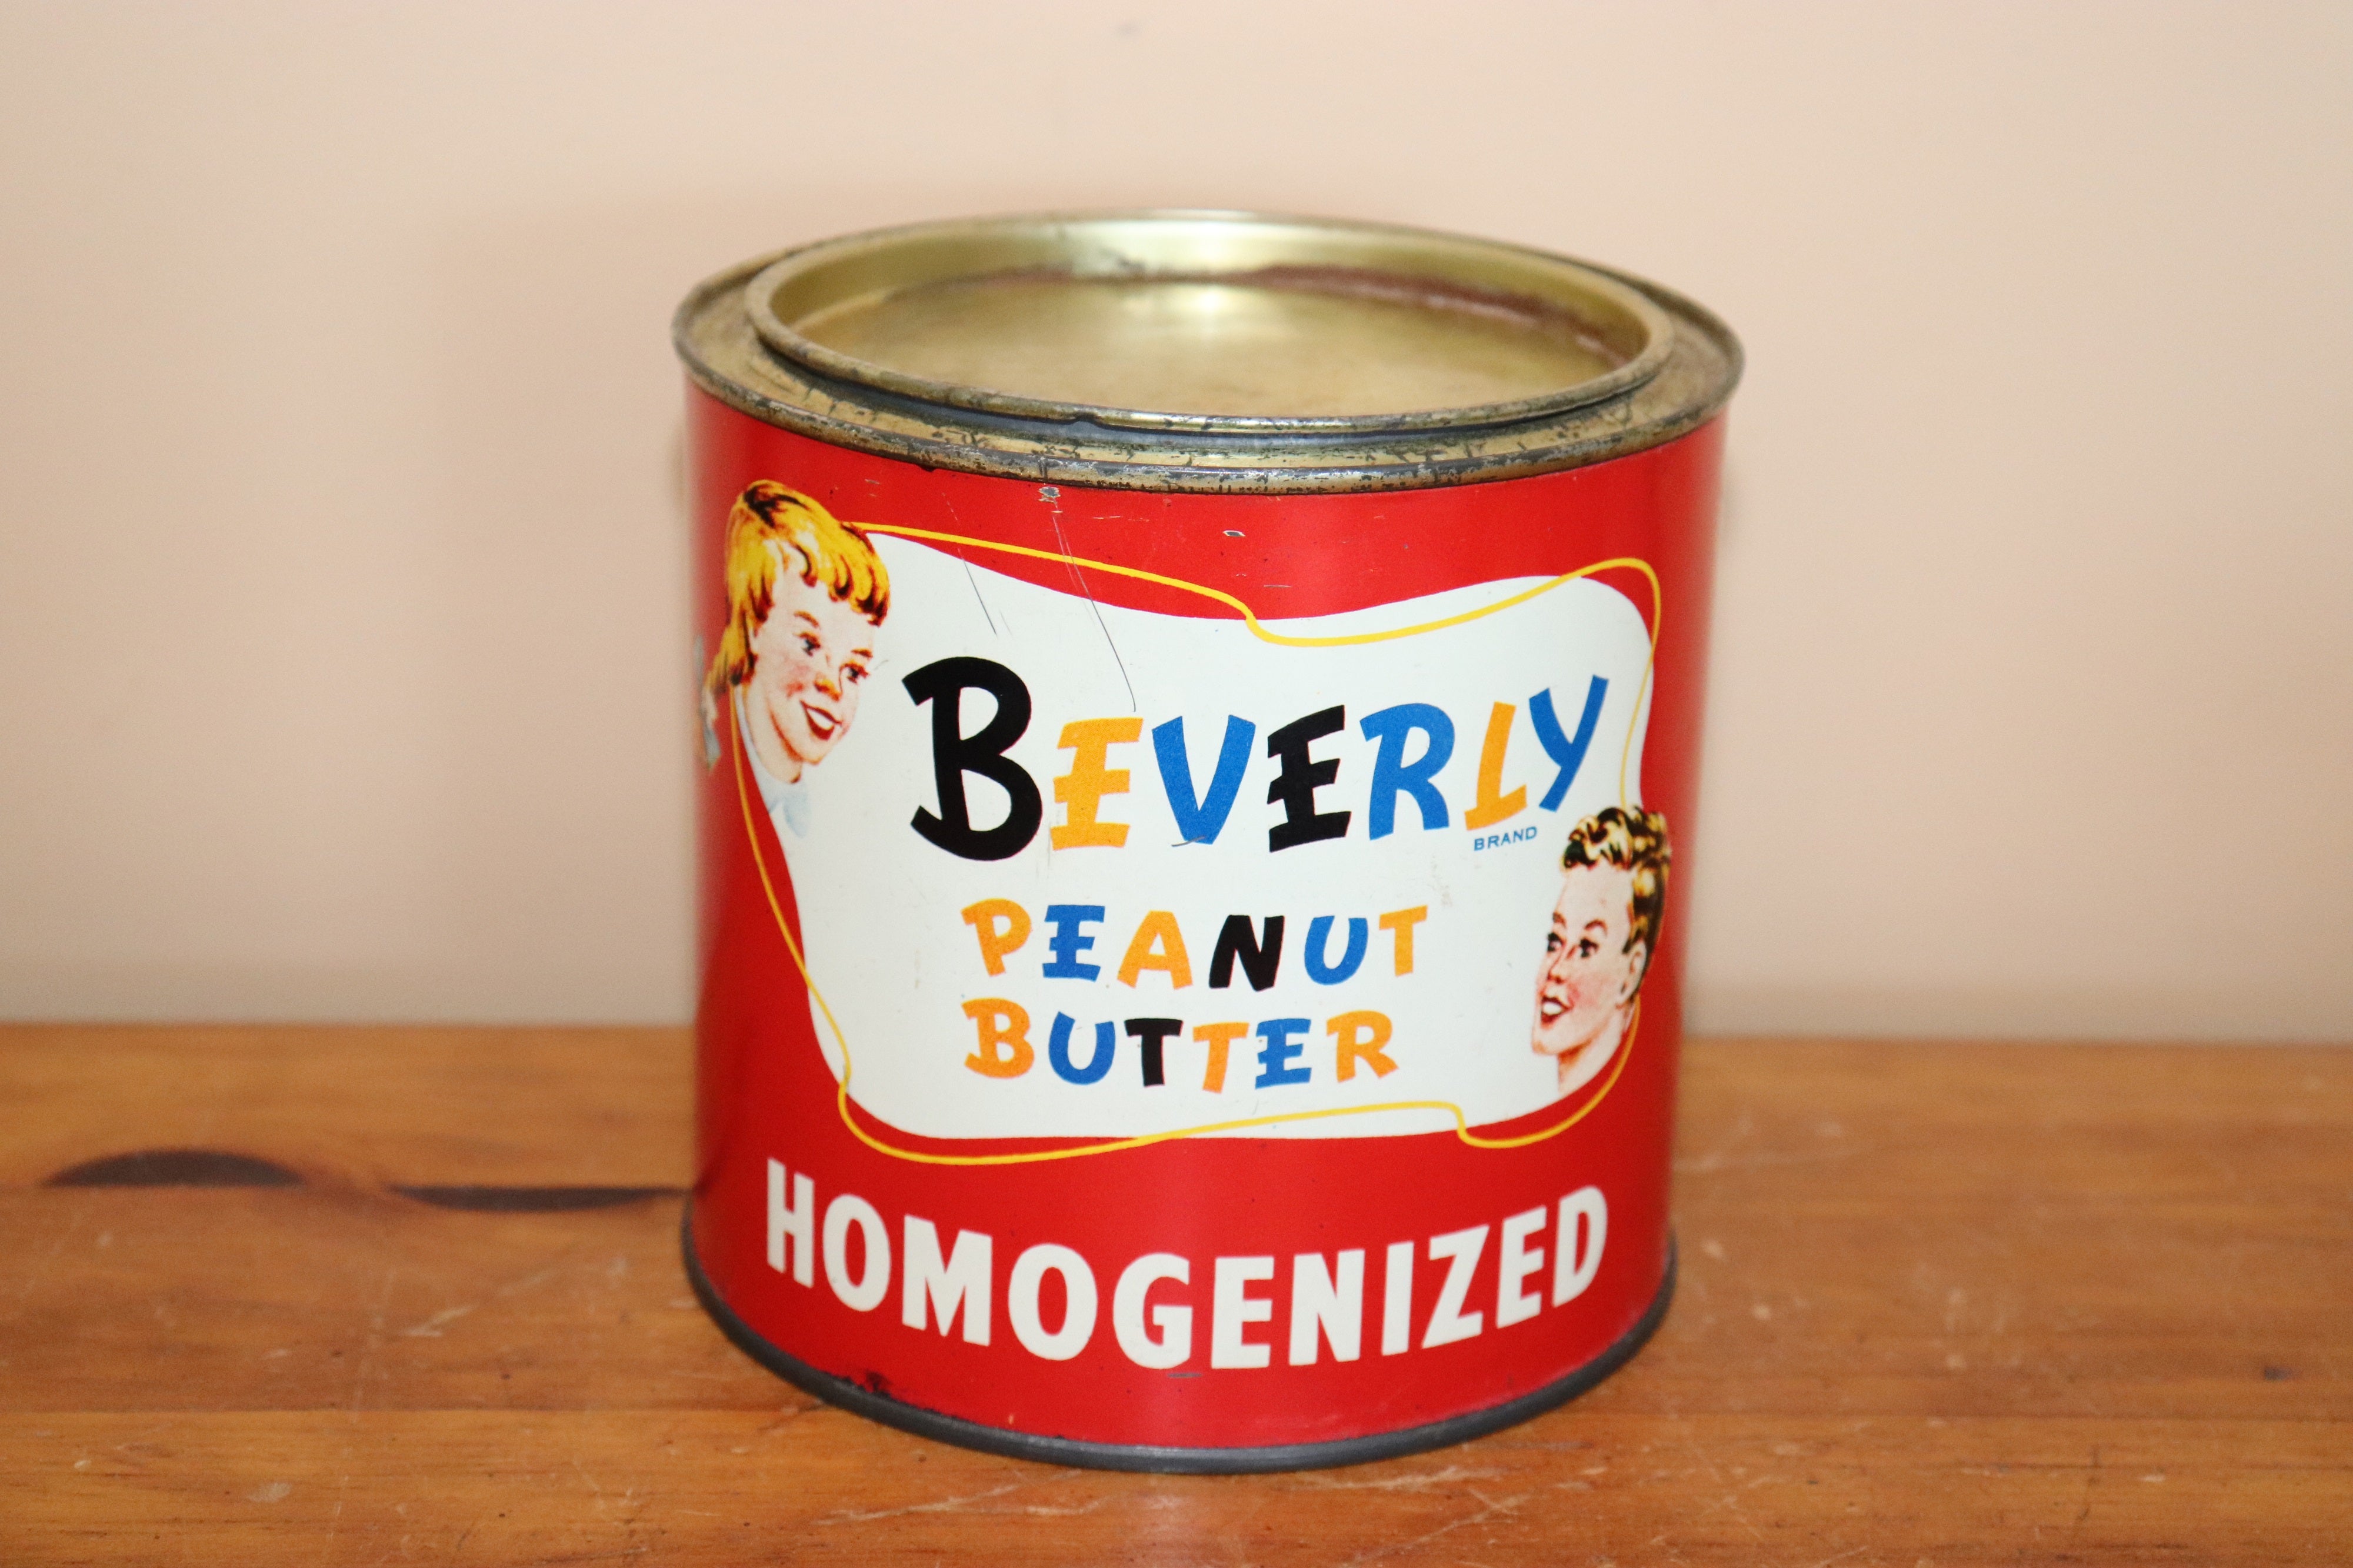 Beverly Brand Peanut Butter tin